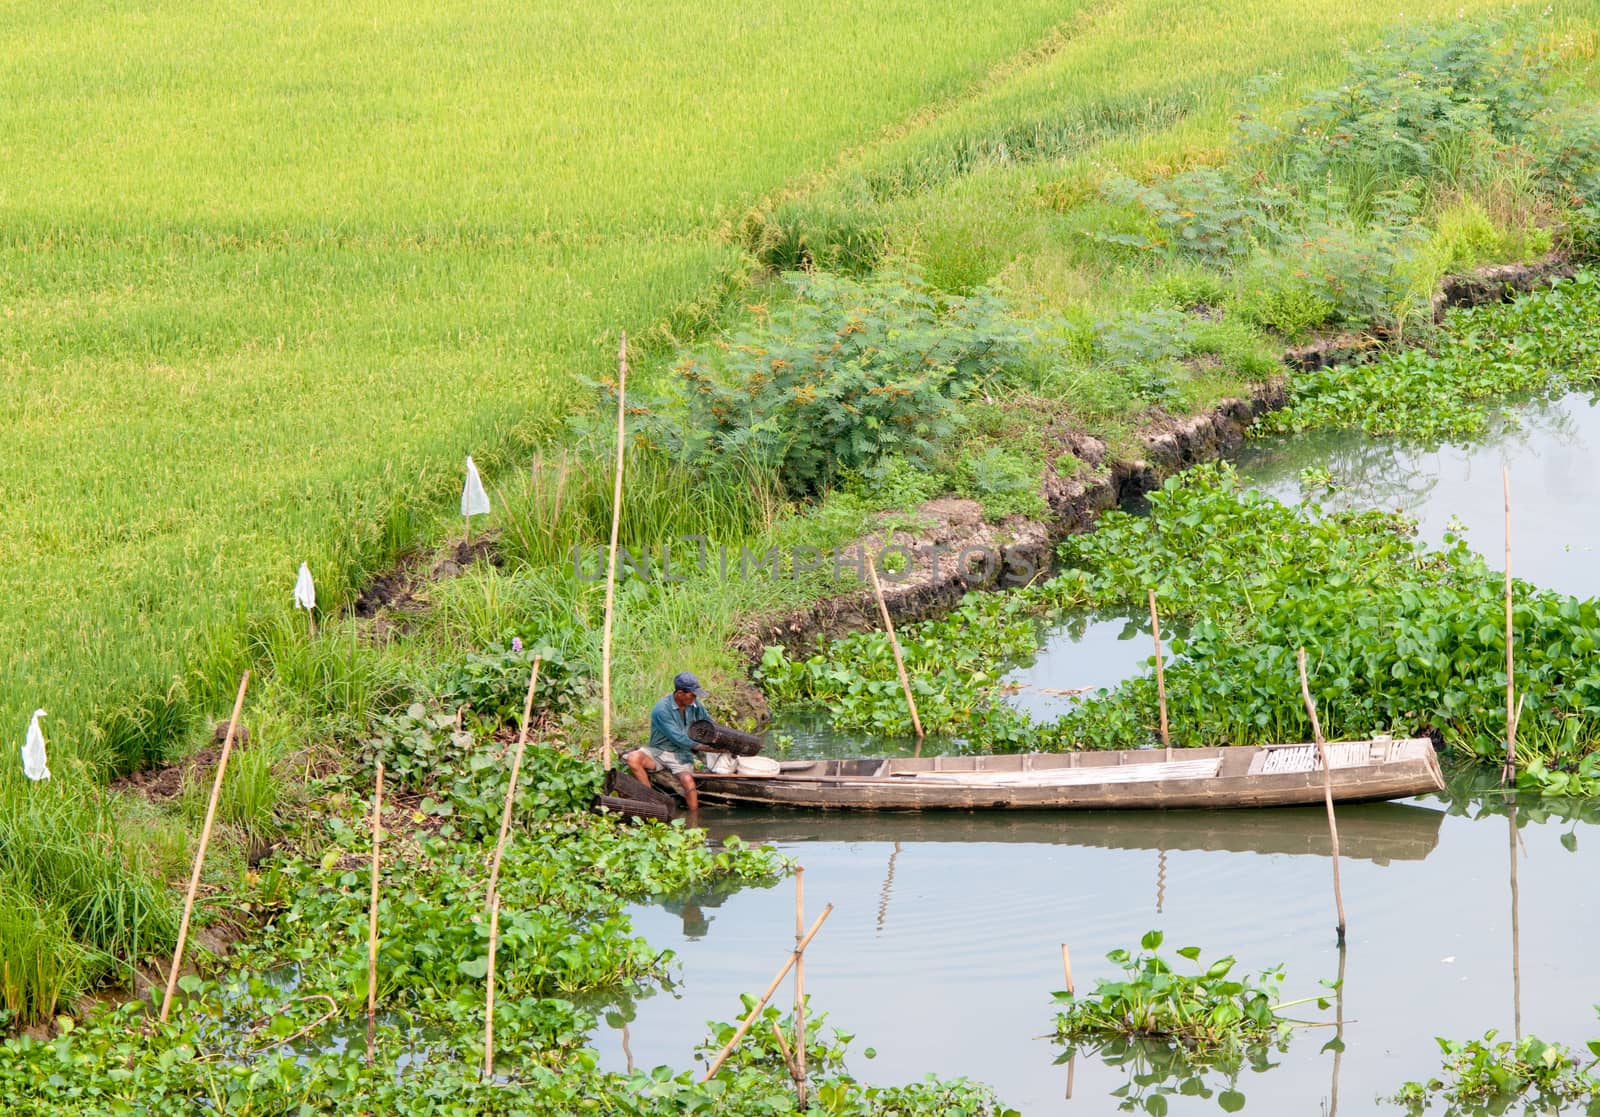 Mekong Delta, Vietnam - Mar 13, 2011. A man sitting on small boat, harvesting vegetables on river in Mekong Delta, southern Vietnam.